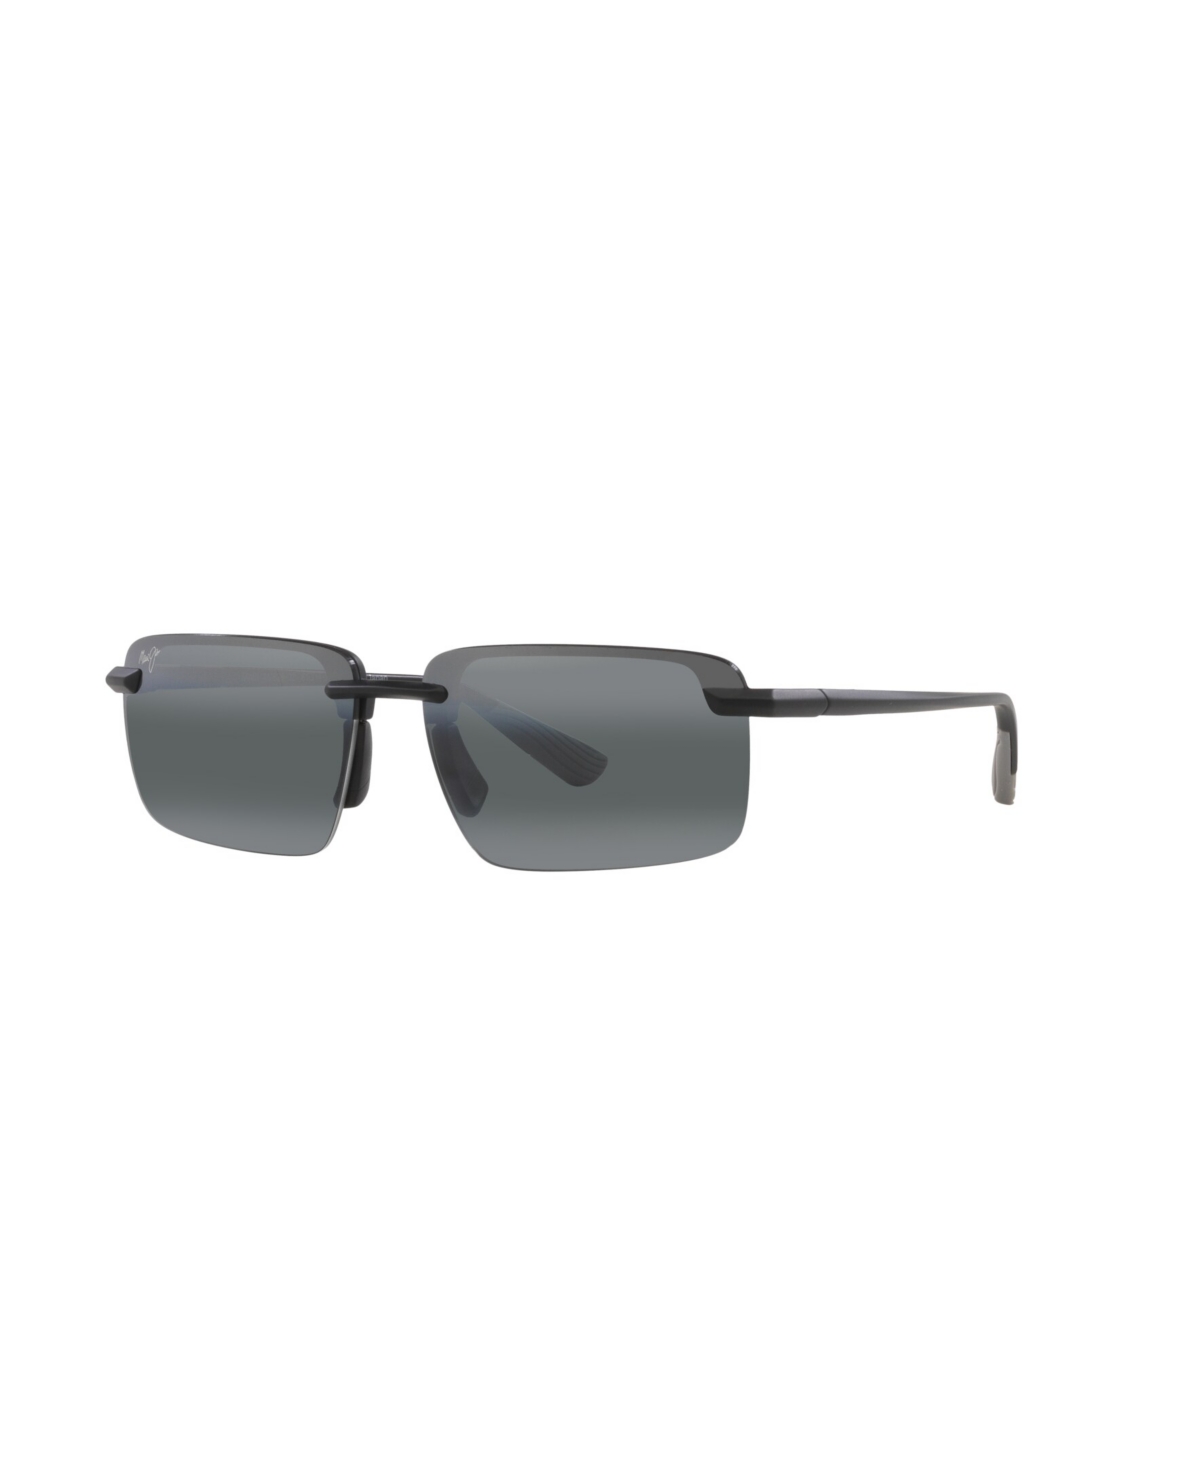 Men's Polarized Sunglasses, Laulima - Matte Black